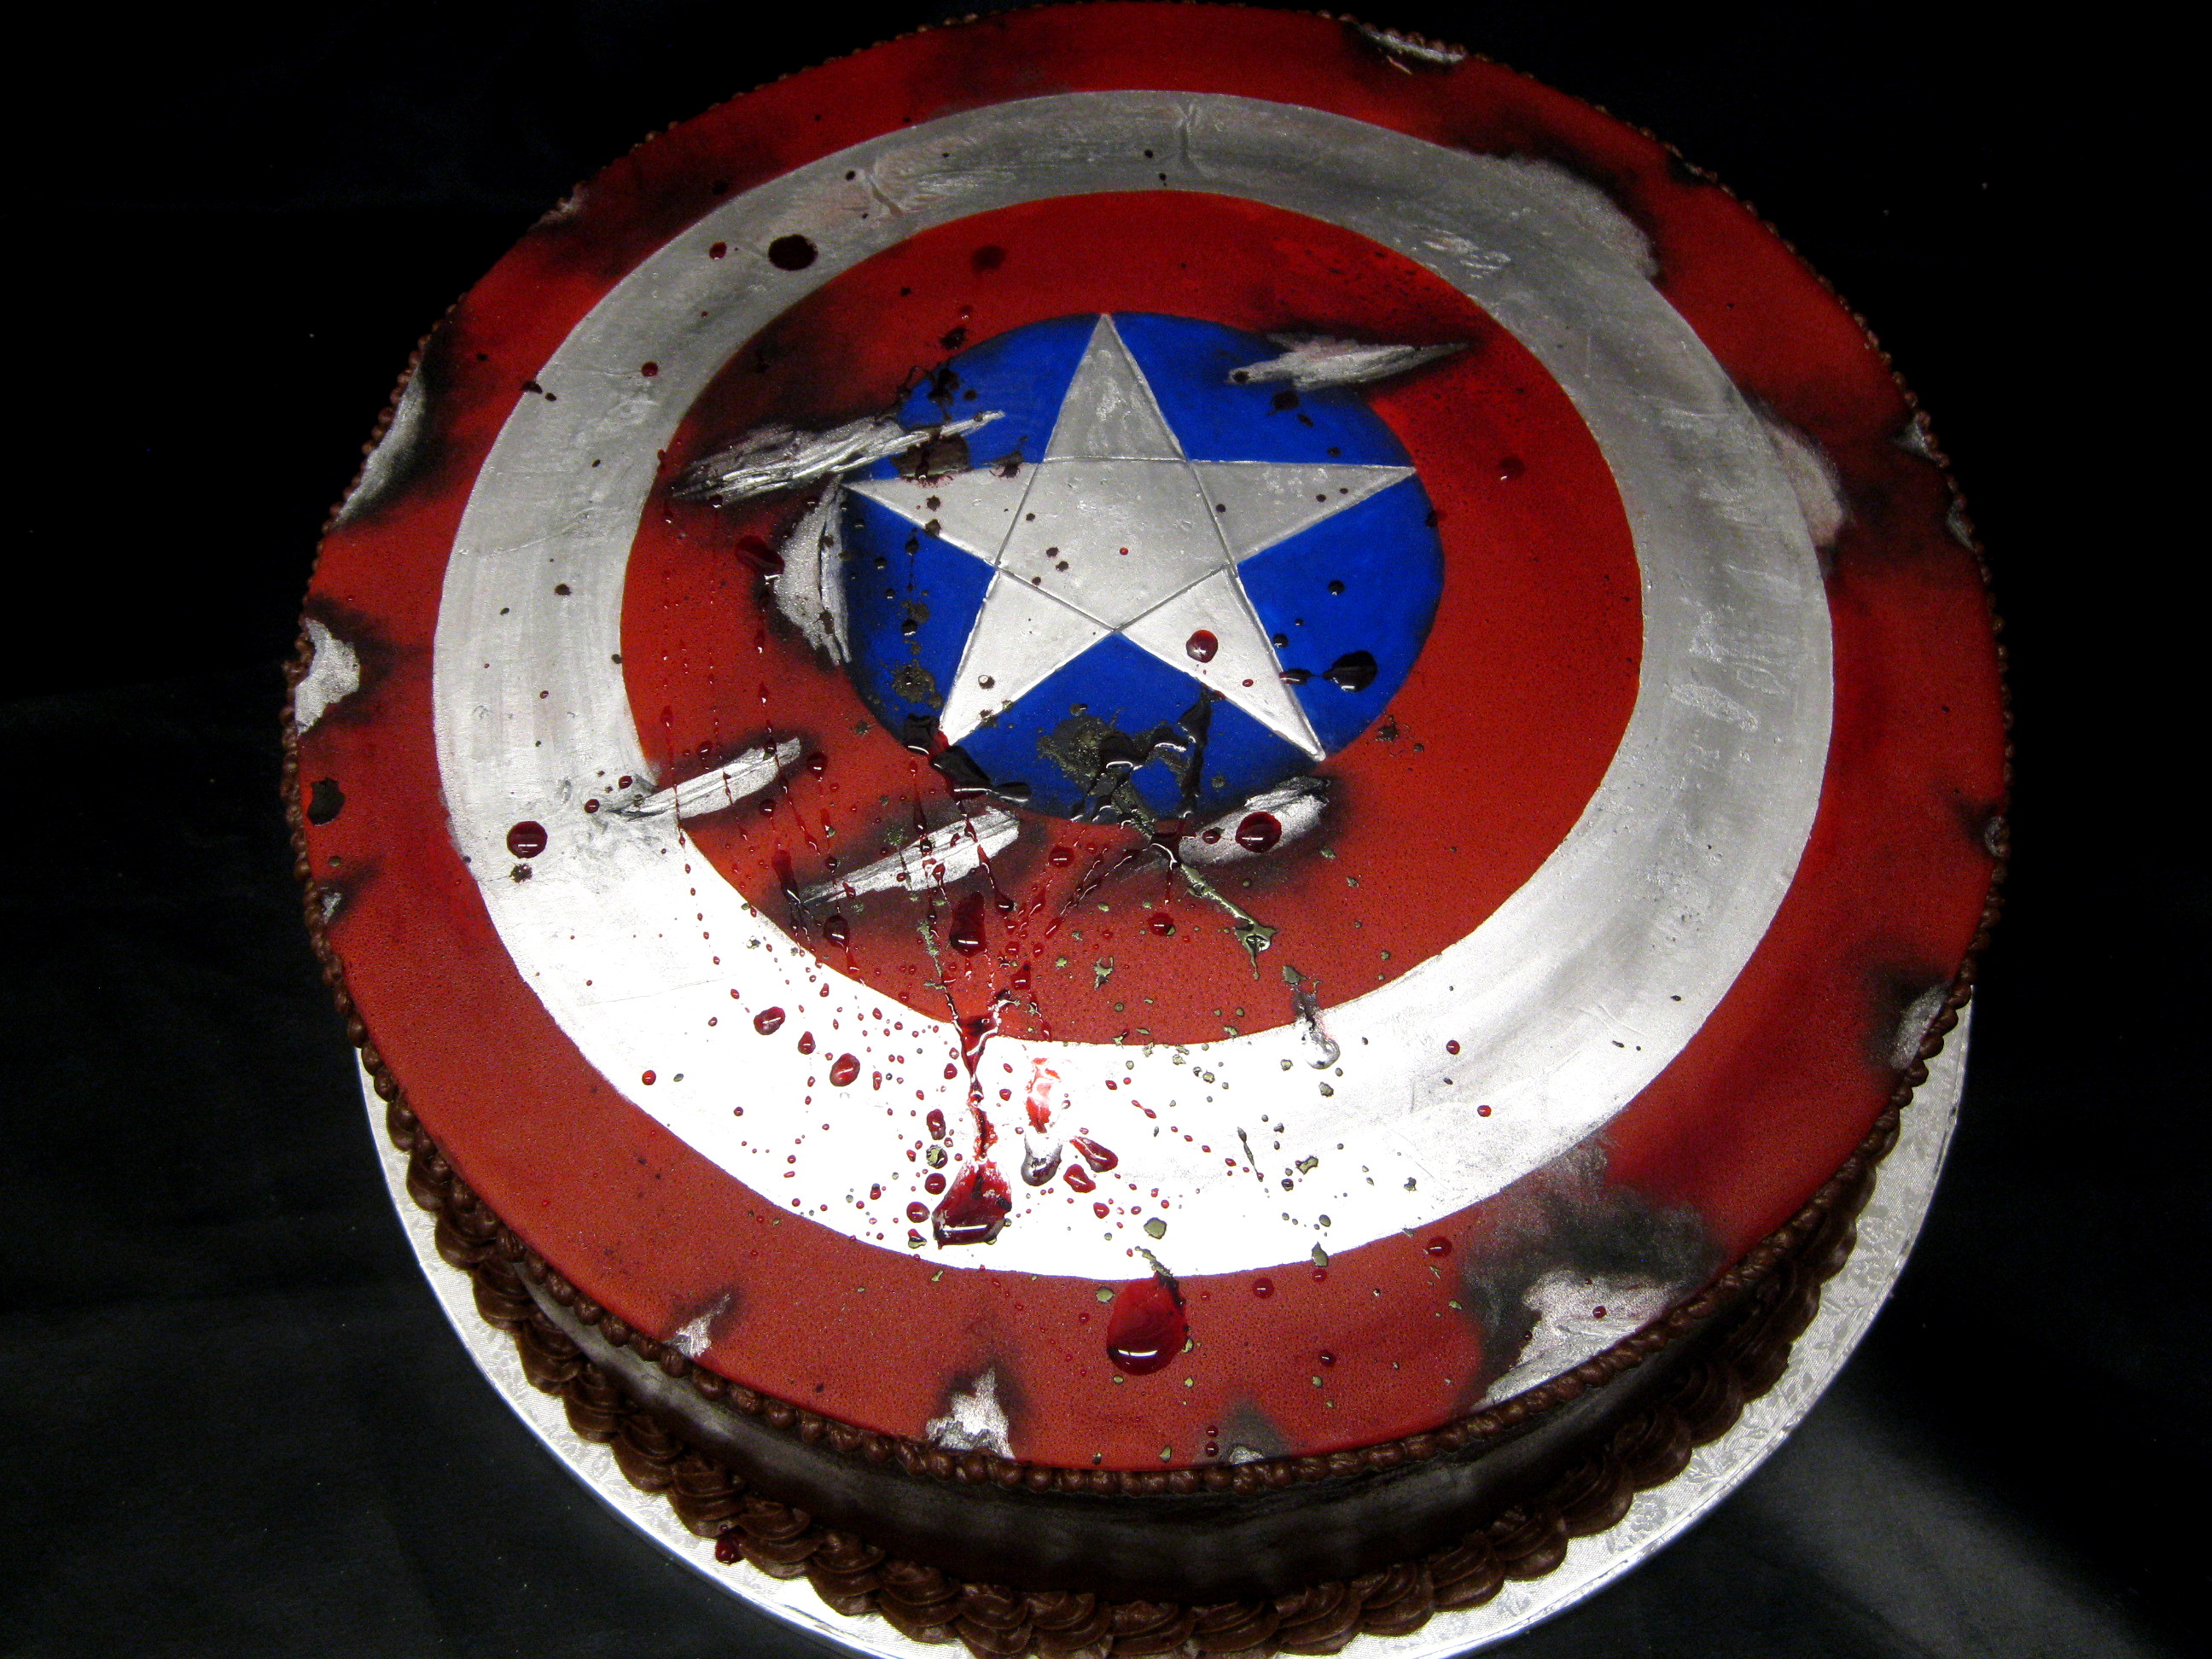 Captain America Cakes – Decoration Ideas | Little Birthday Cakes